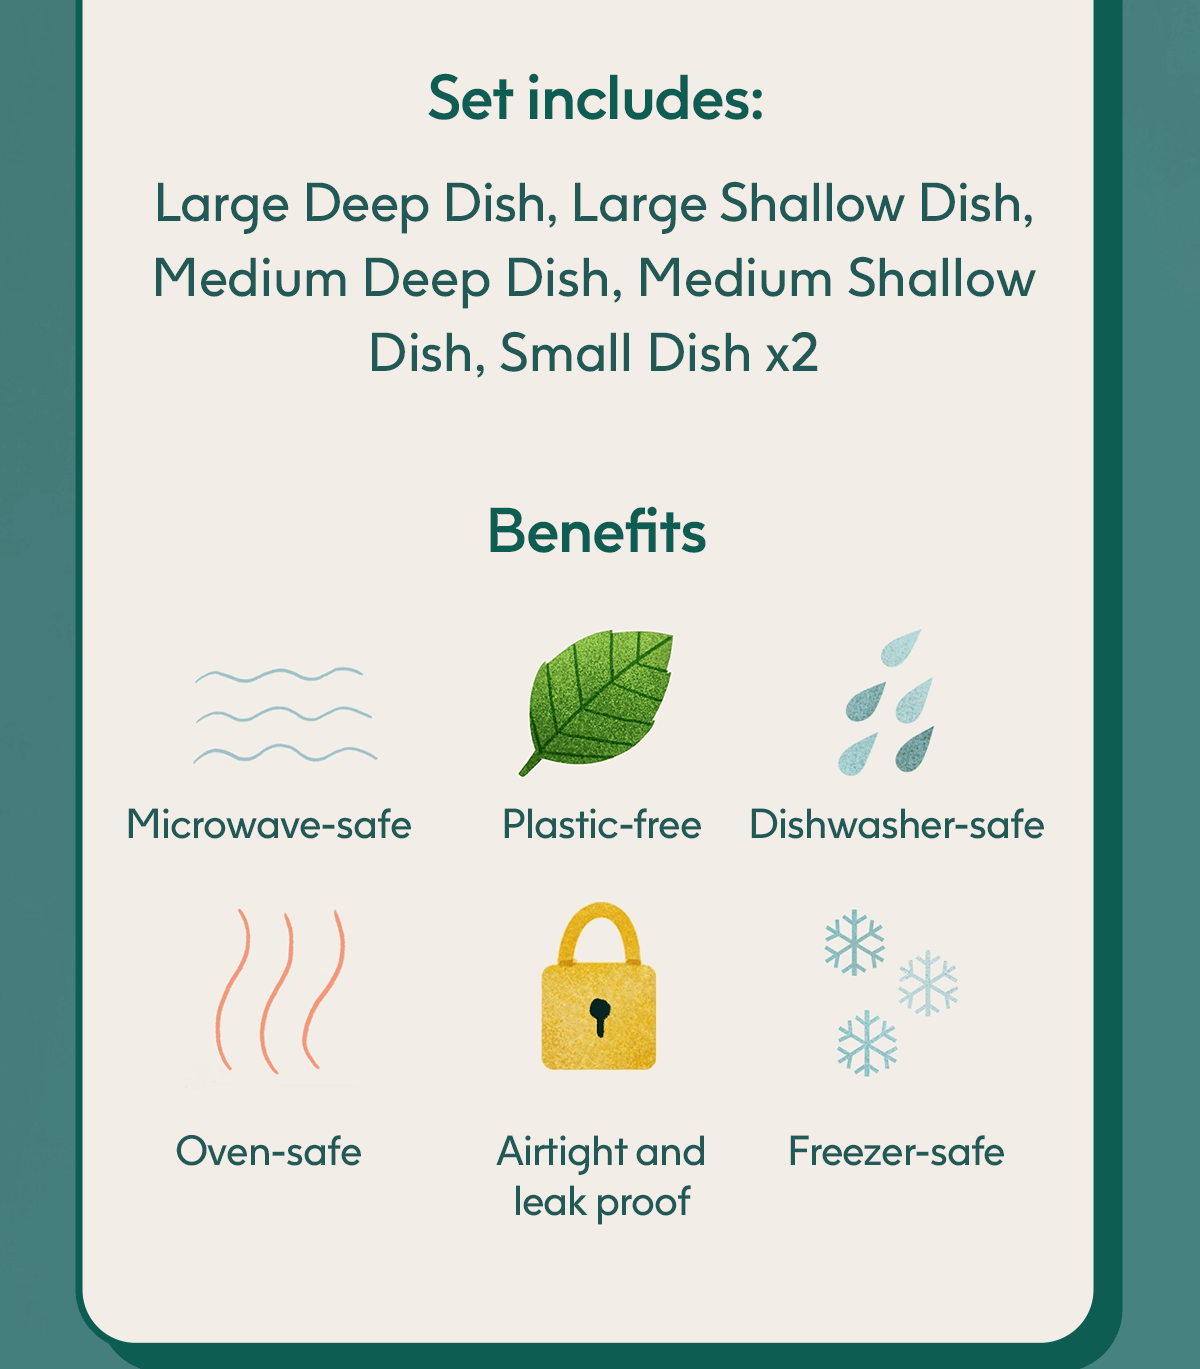 Set includes: Large Deep Dish, Large Shallow Dish, Medium Deep Dish, Medium Shallow Dish, Small Dish x 2